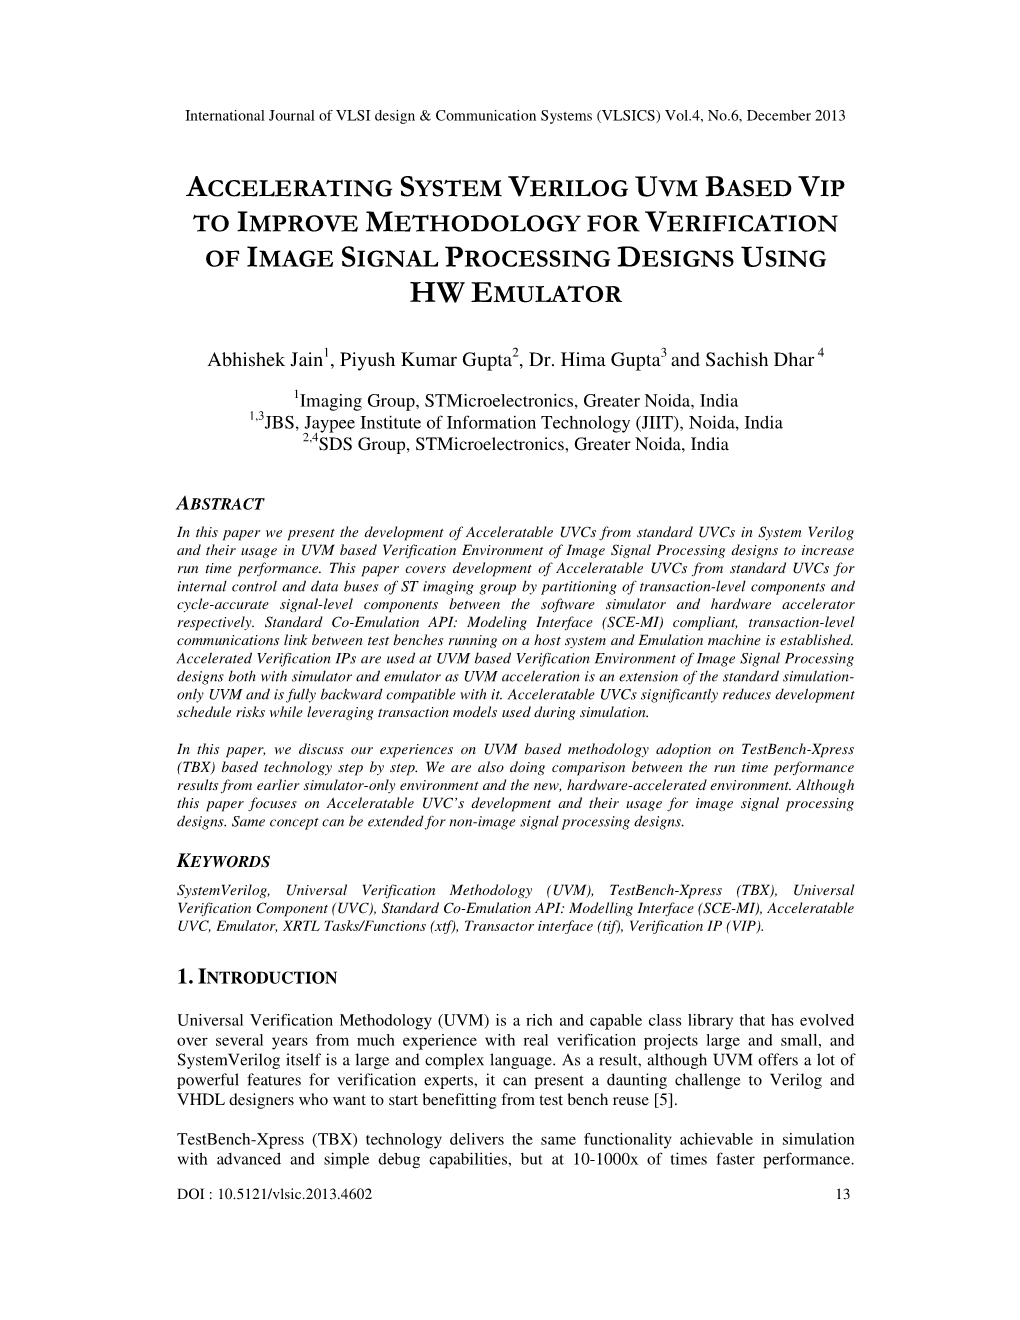 Accelerating System Verilog Uvm Based Vip to Improve Methodology for Verification of Image Signal Processing Designs Using Hw Emulator